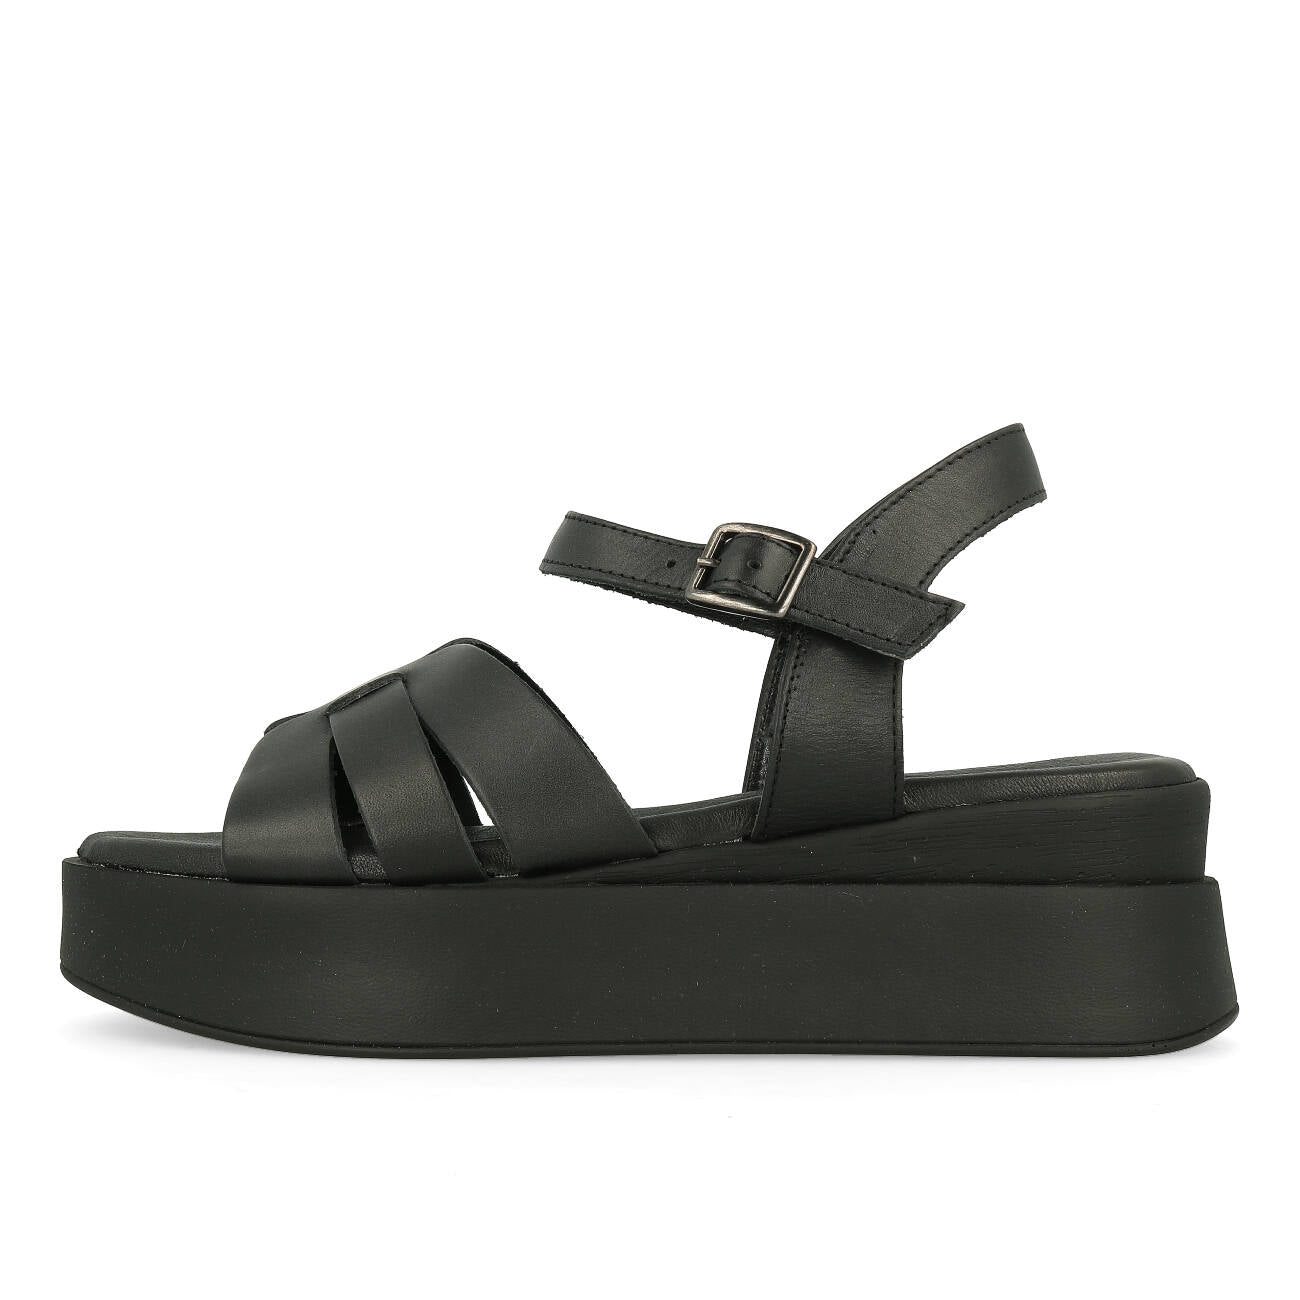 Tamaris 1-1-28246-20-003 Sandale Damen Black Leather